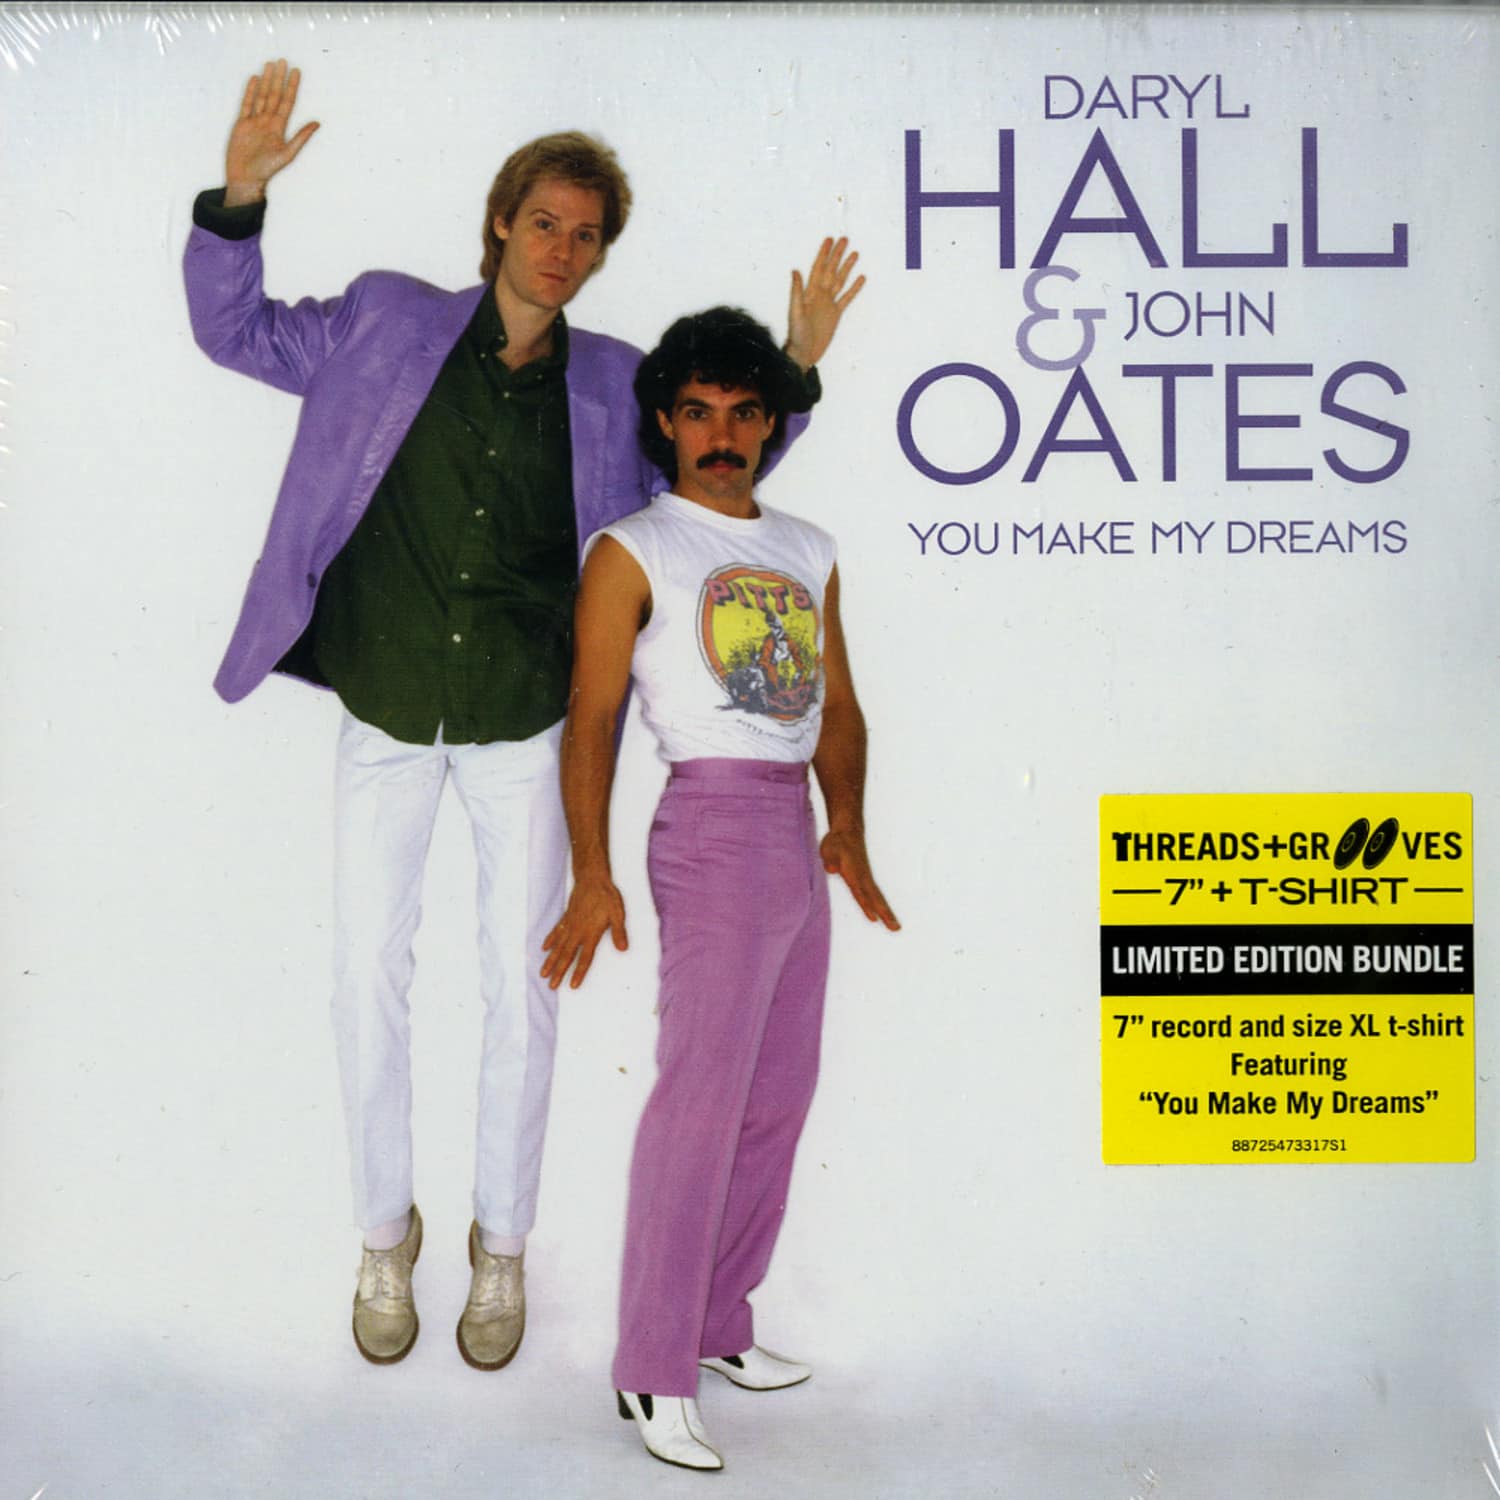 Daryl Hall & John Oates - THREADS+GROOVES 